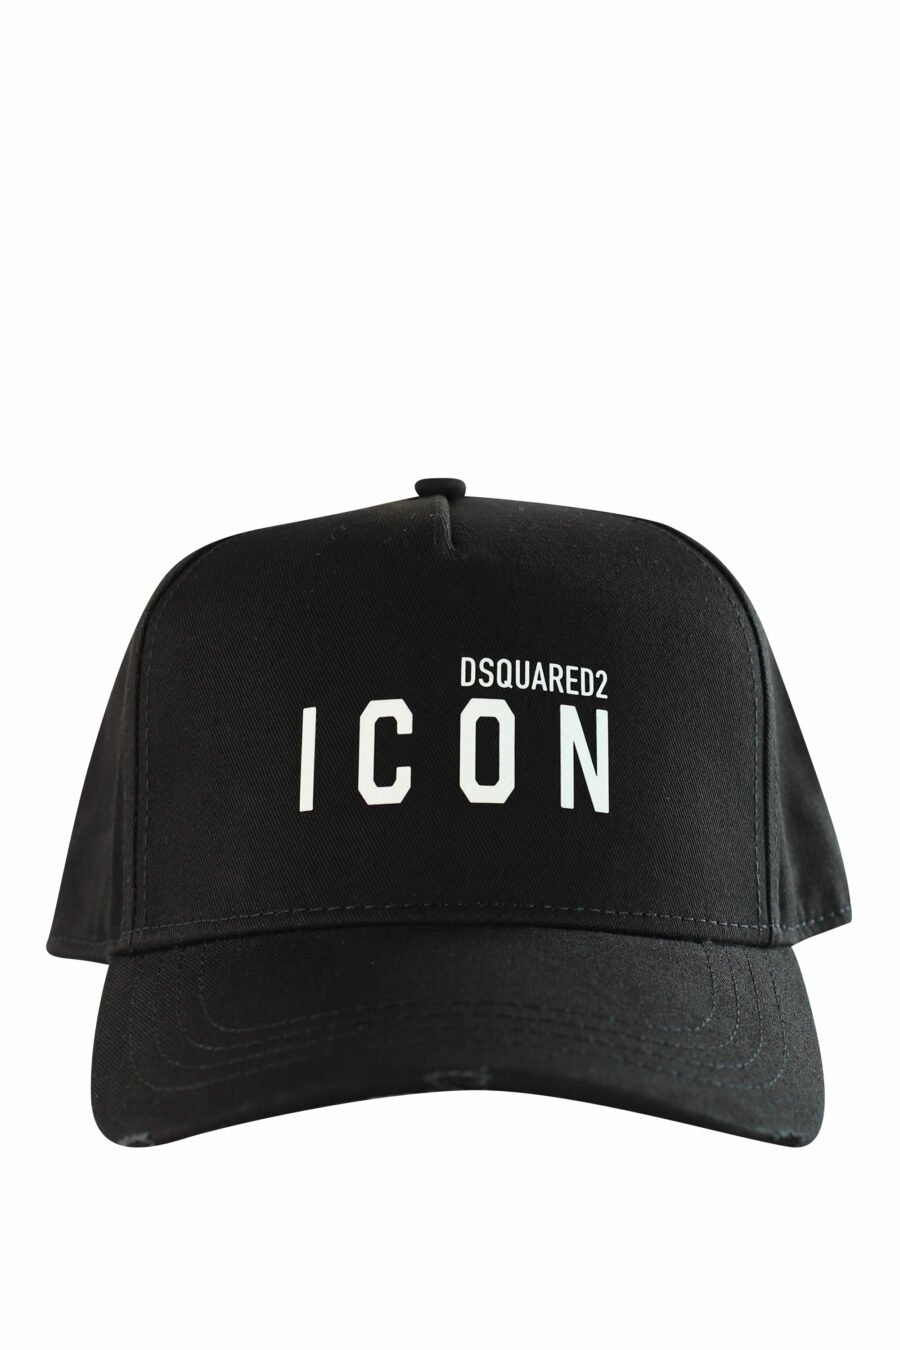 Schwarze Kappe mit doppeltem "Icon"-Logo - IMG 1211